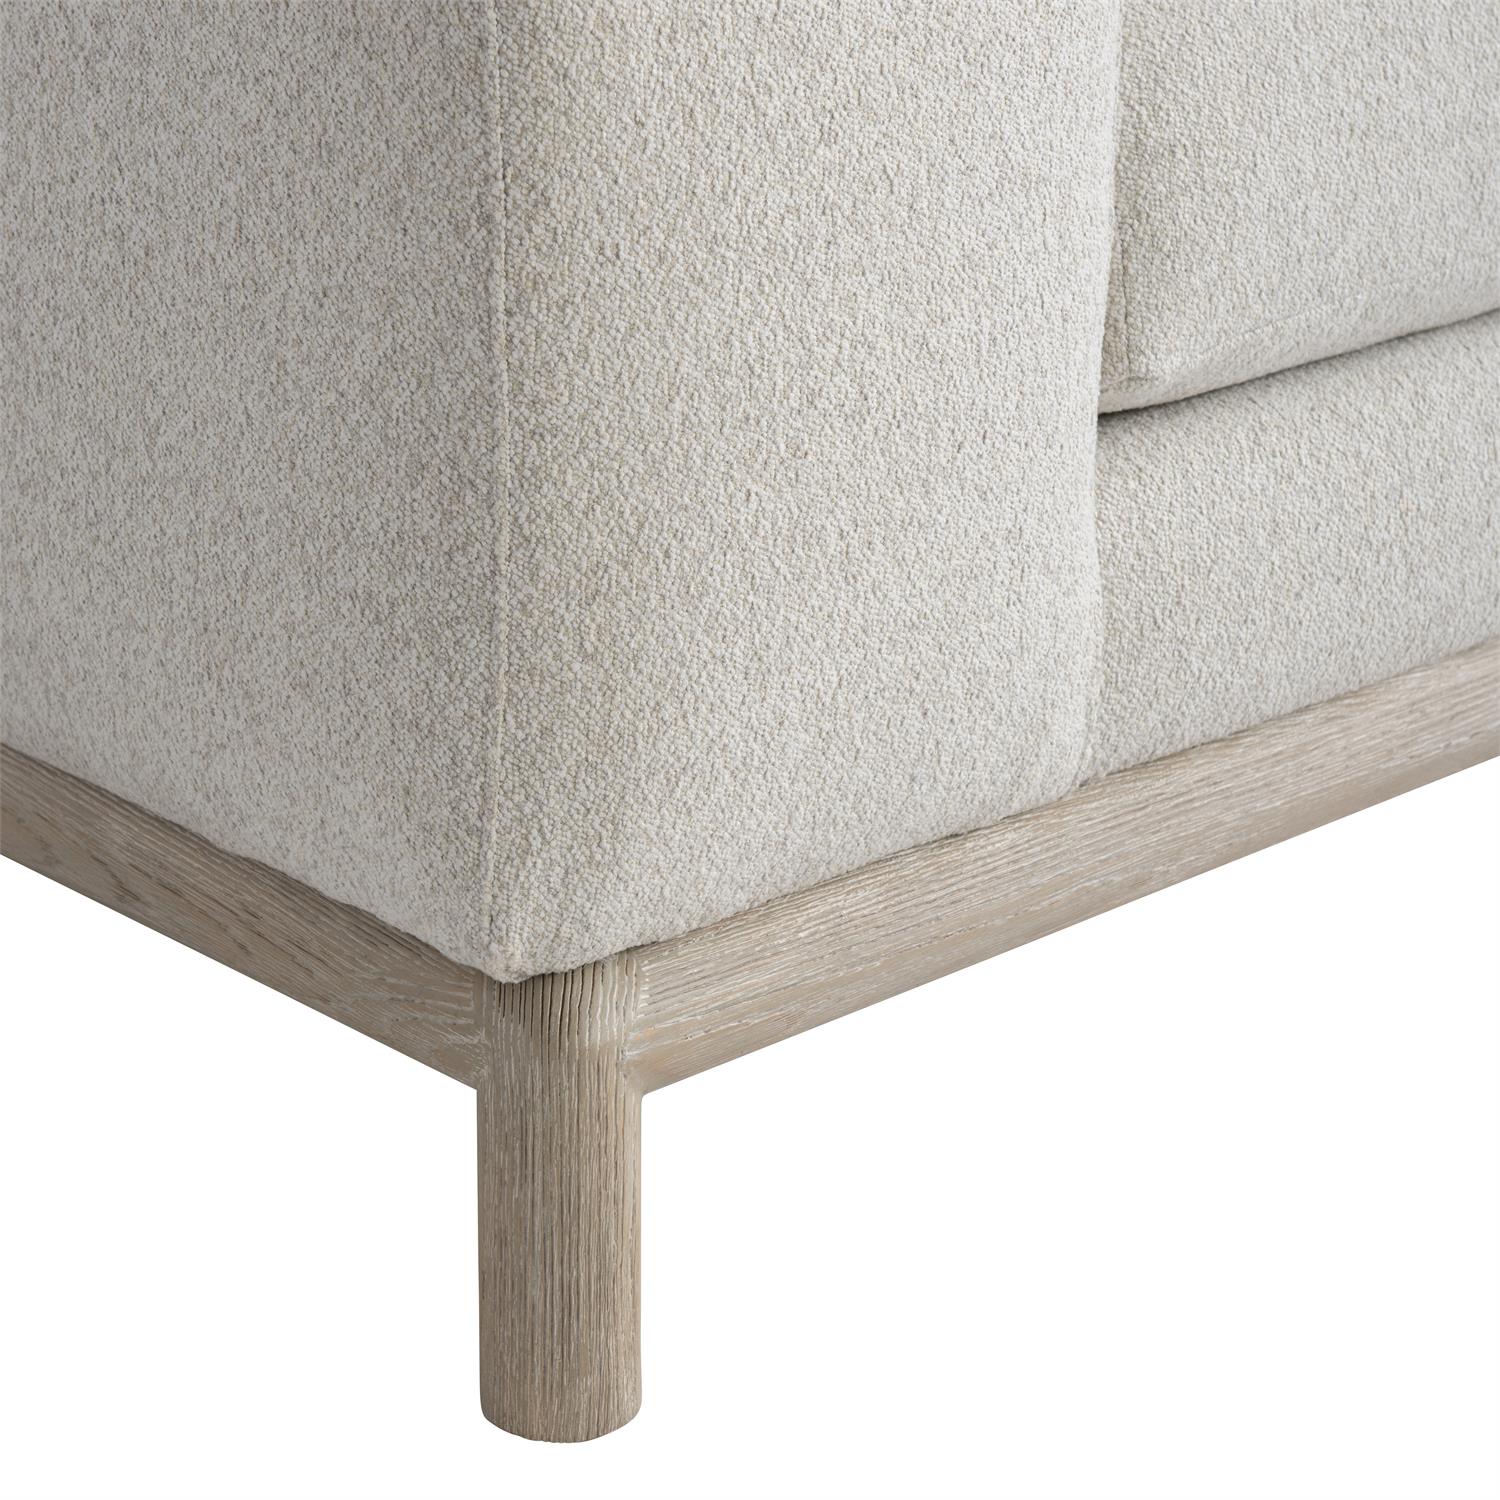 1373-002 Fabric & Flaxen Finish Wood | Bernhardt Hadley Fabric Sofa | Valley Ridge Furniture